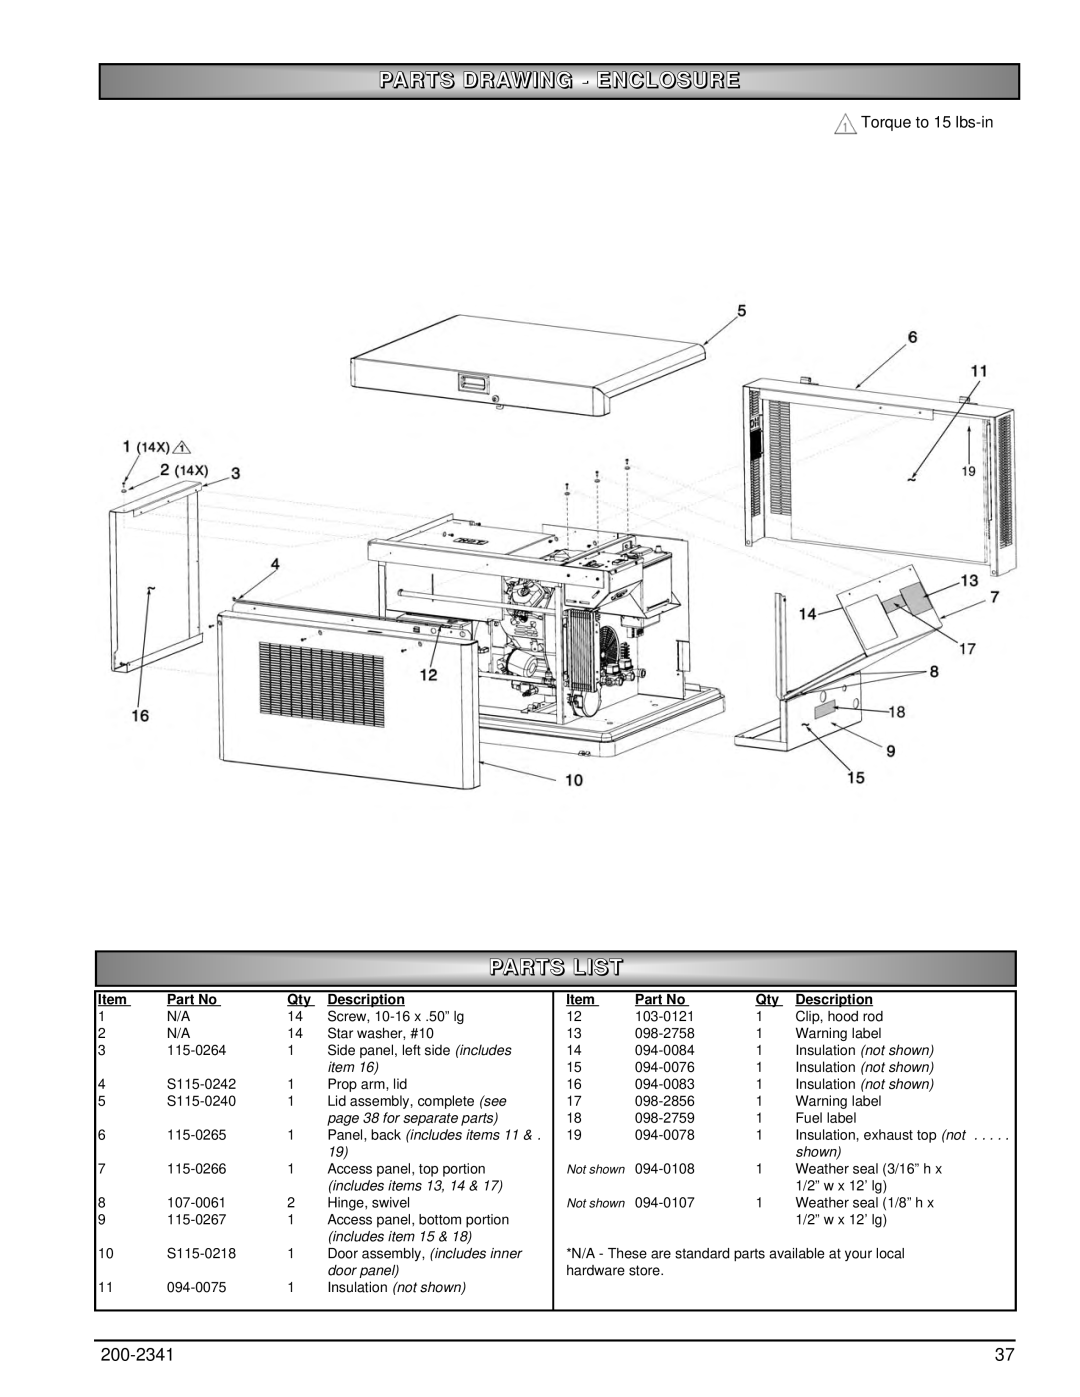 Powermate PM400911 Parts Drawing - Enclosure, Parts List, Description, page 38 for separate parts, shown, includes items 